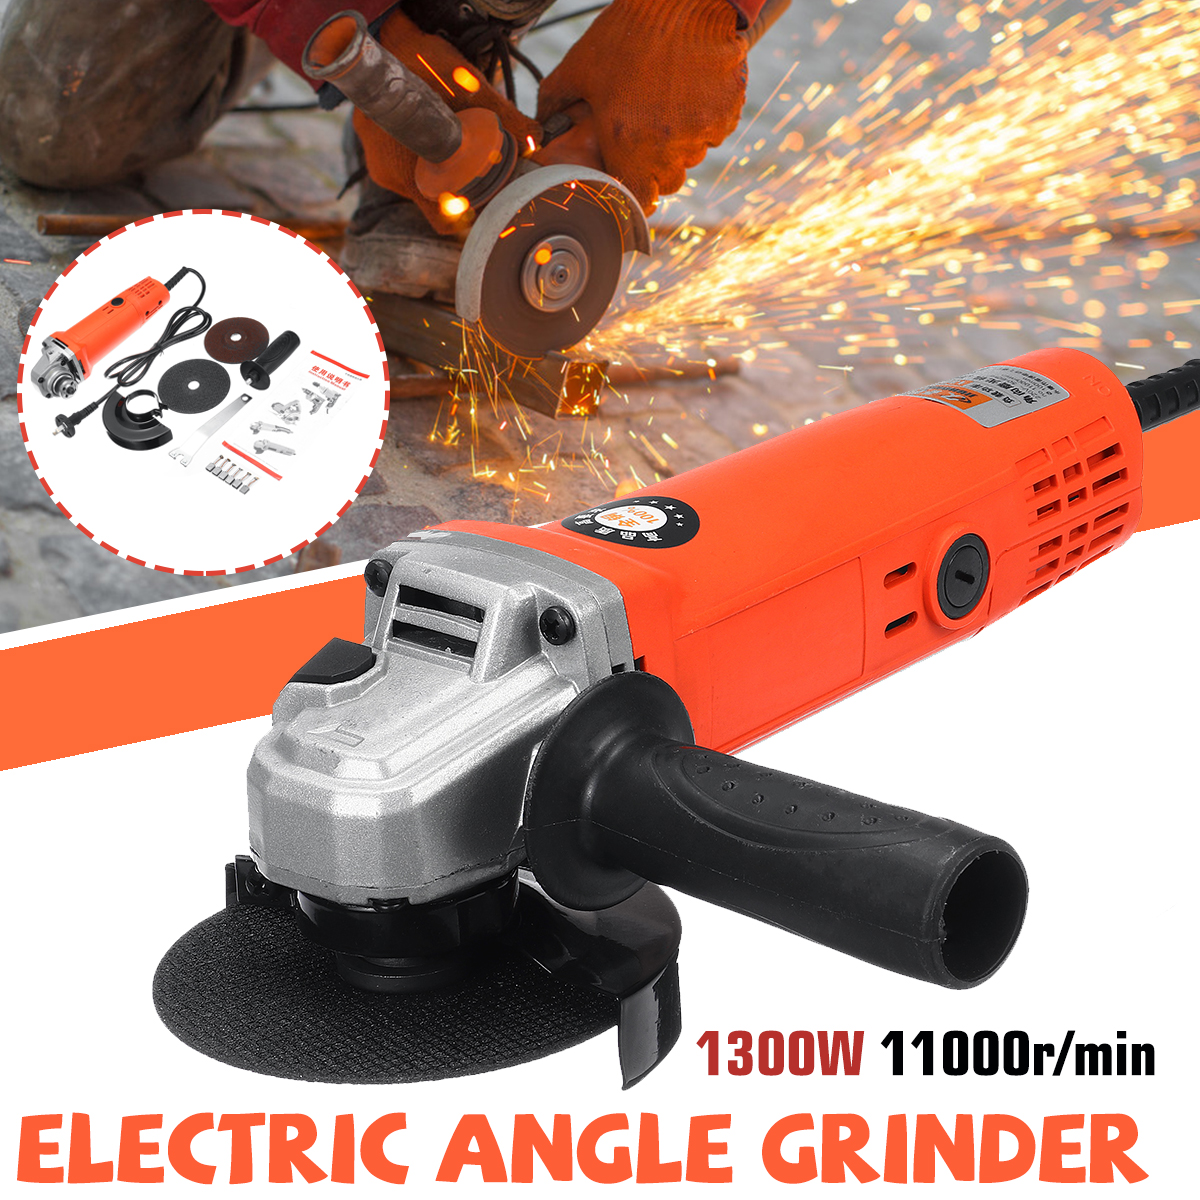 1300W-Electric-Angle-Grinder-11000rmin-Grinding-Polishing-Machine-Set-1612291-1